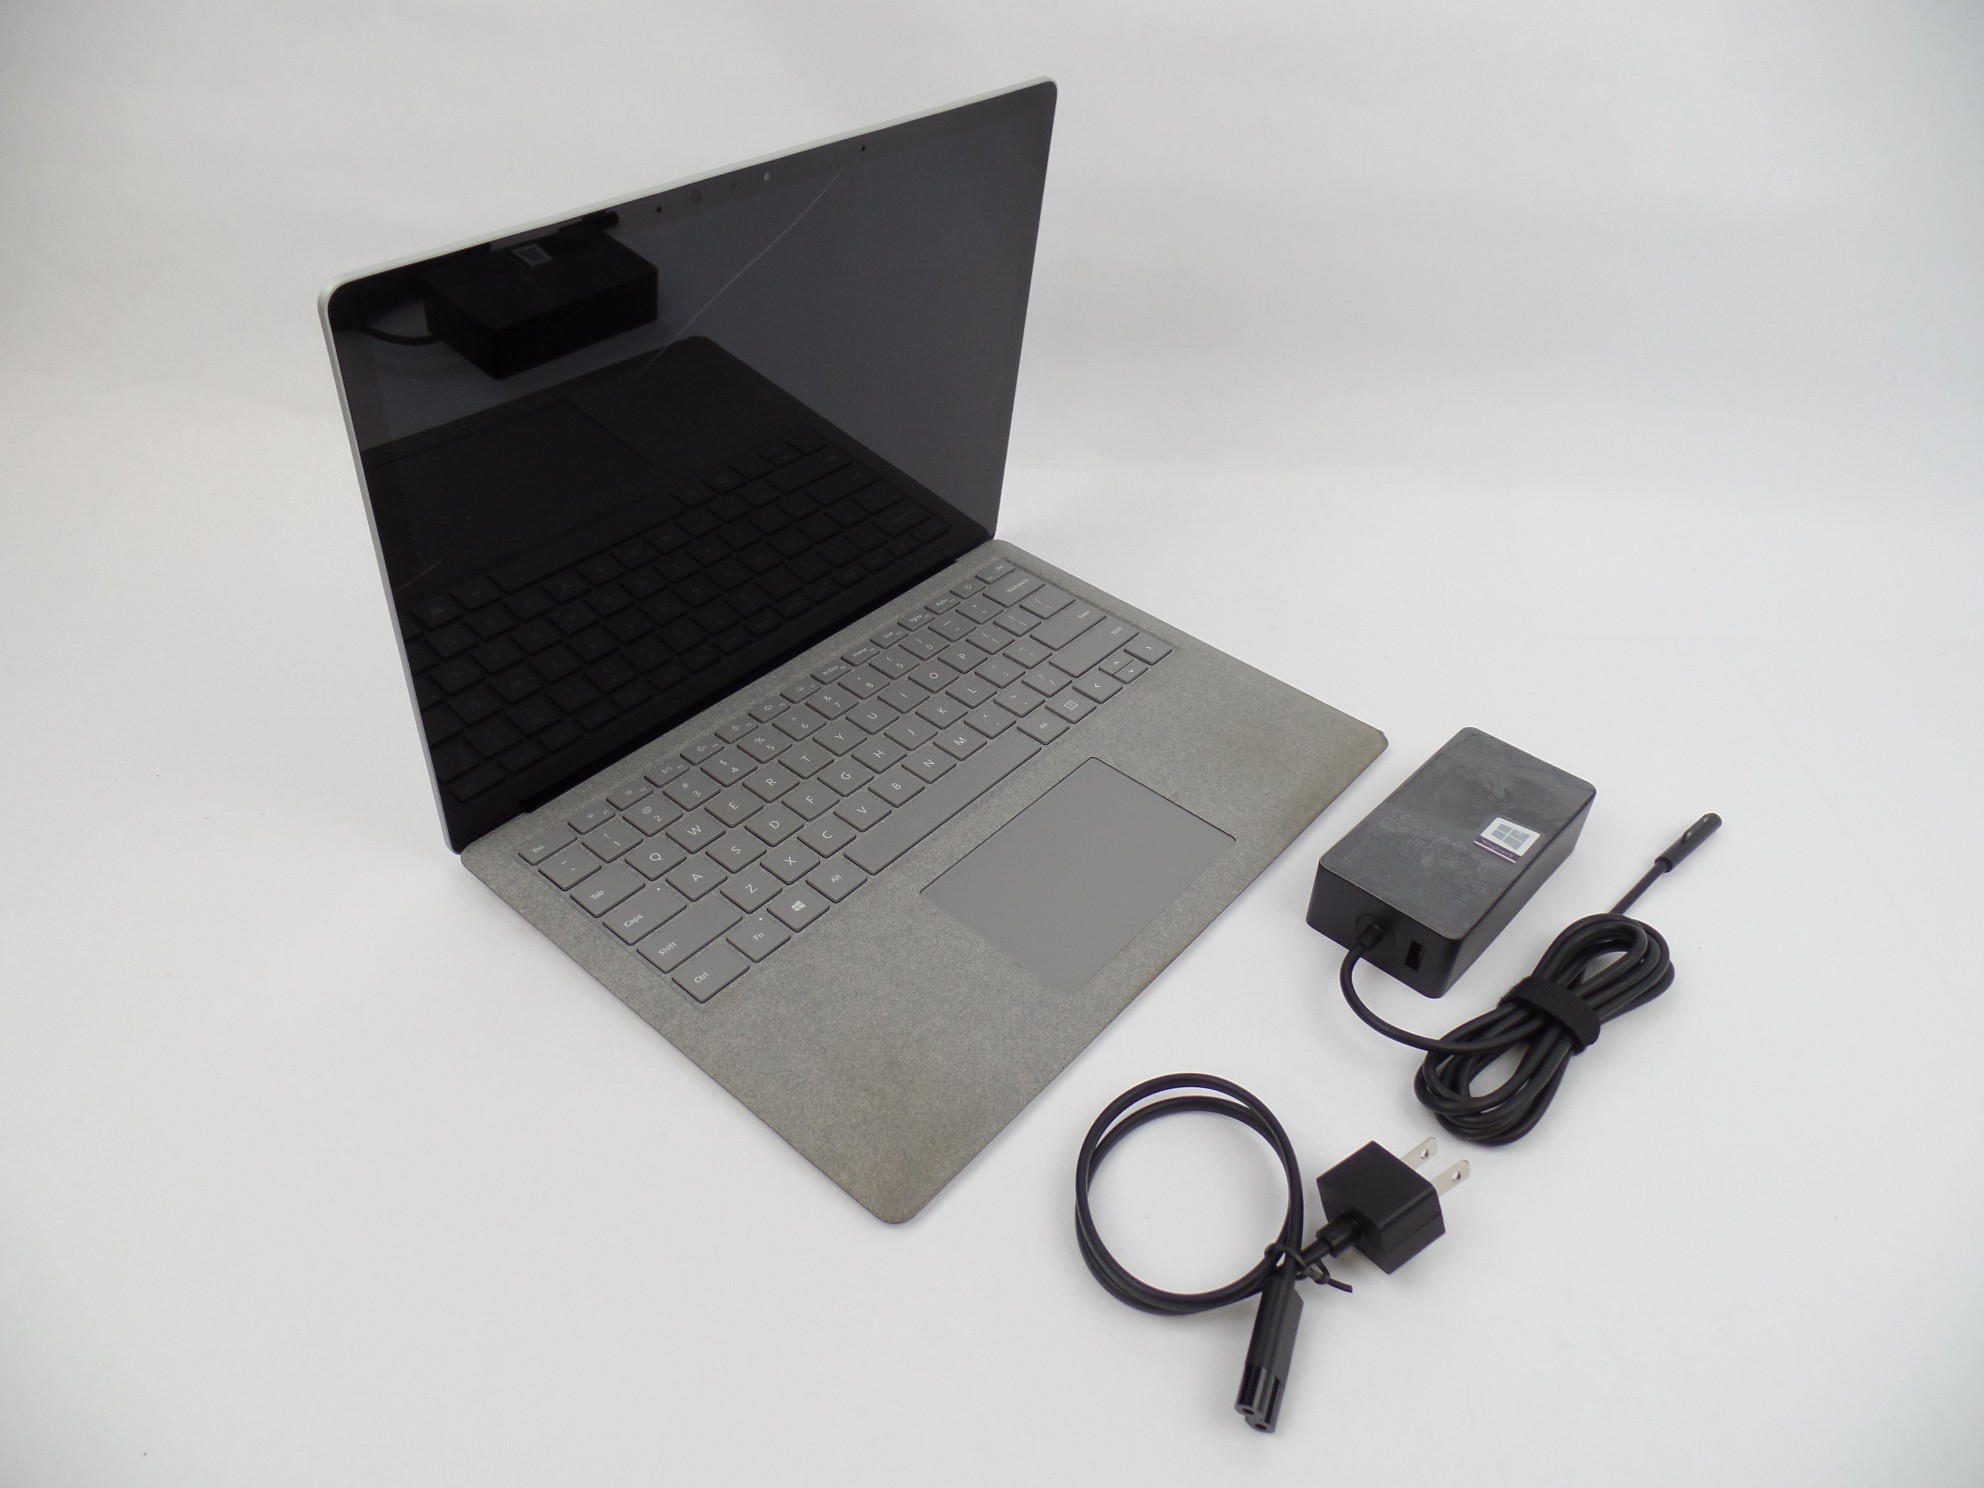 Microsoft Surface Laptop 1769 13.5" Touch i5-7200 2.5GHz 8GB 256GB W10H Crack U3